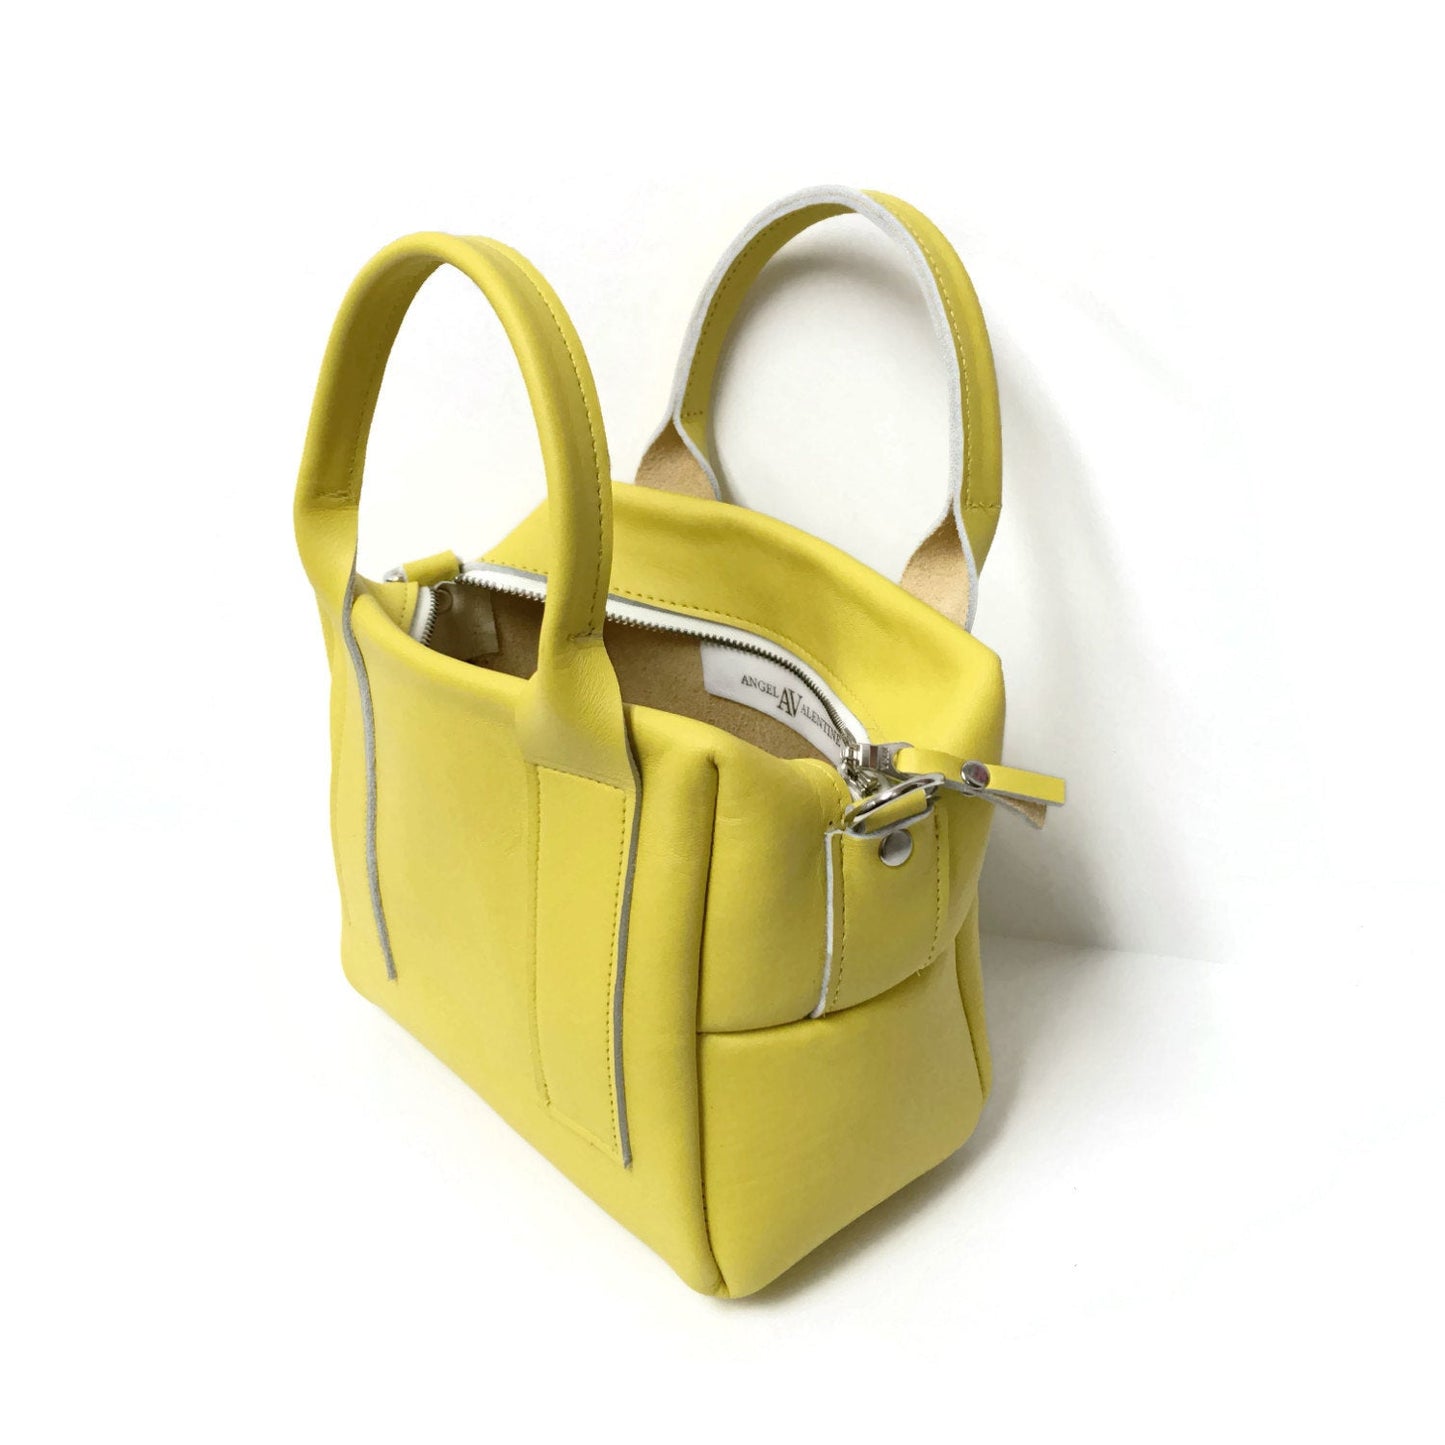 Box Bag in citron yellow